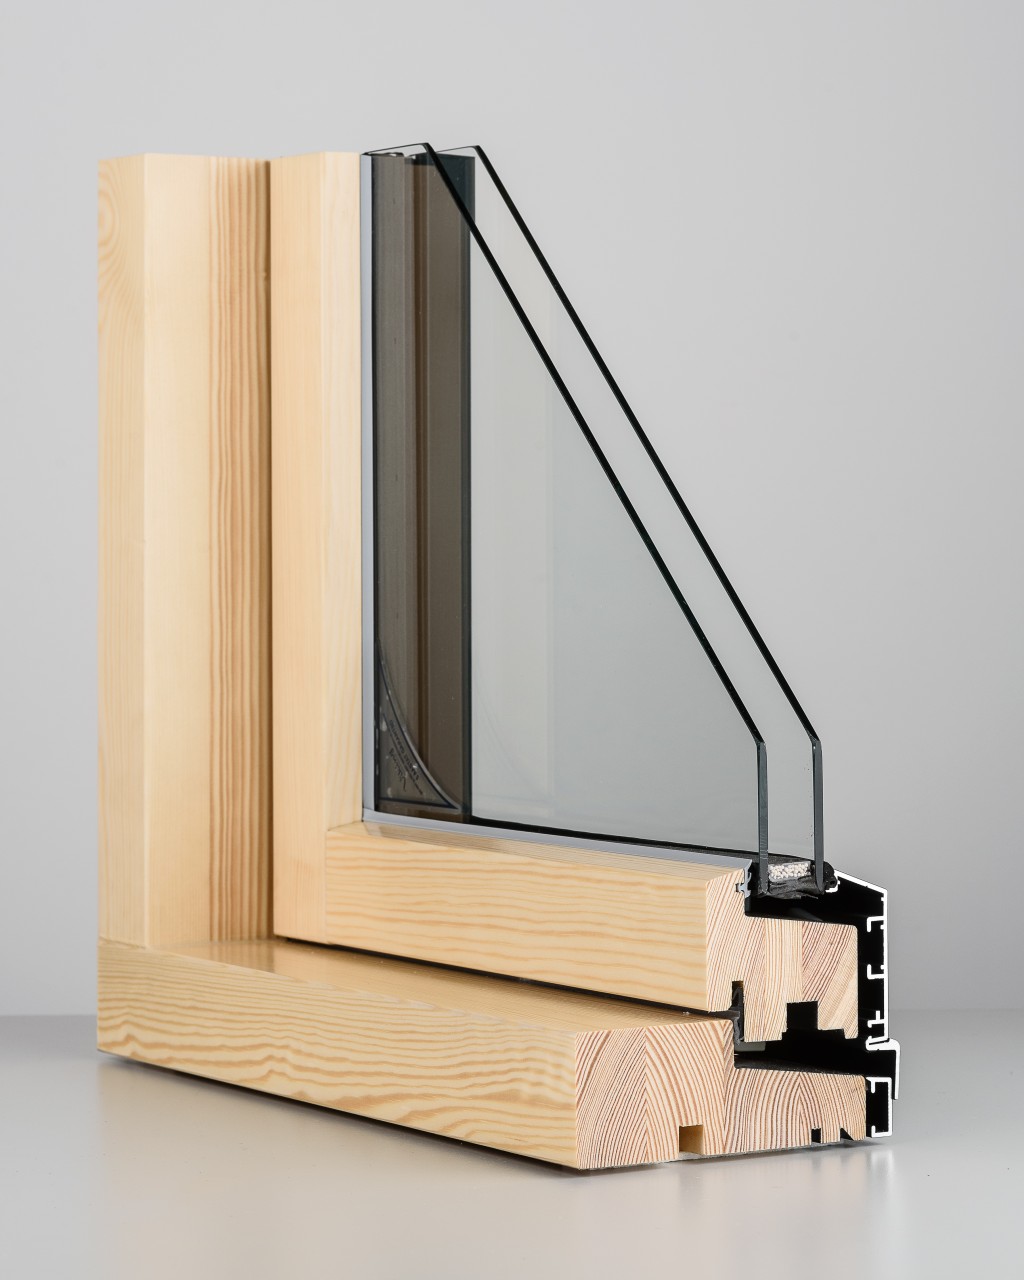 Wooden and Aluclad Windows Double Glazed Outward Opening Viking 12 Uw = 1.2 W/m2K